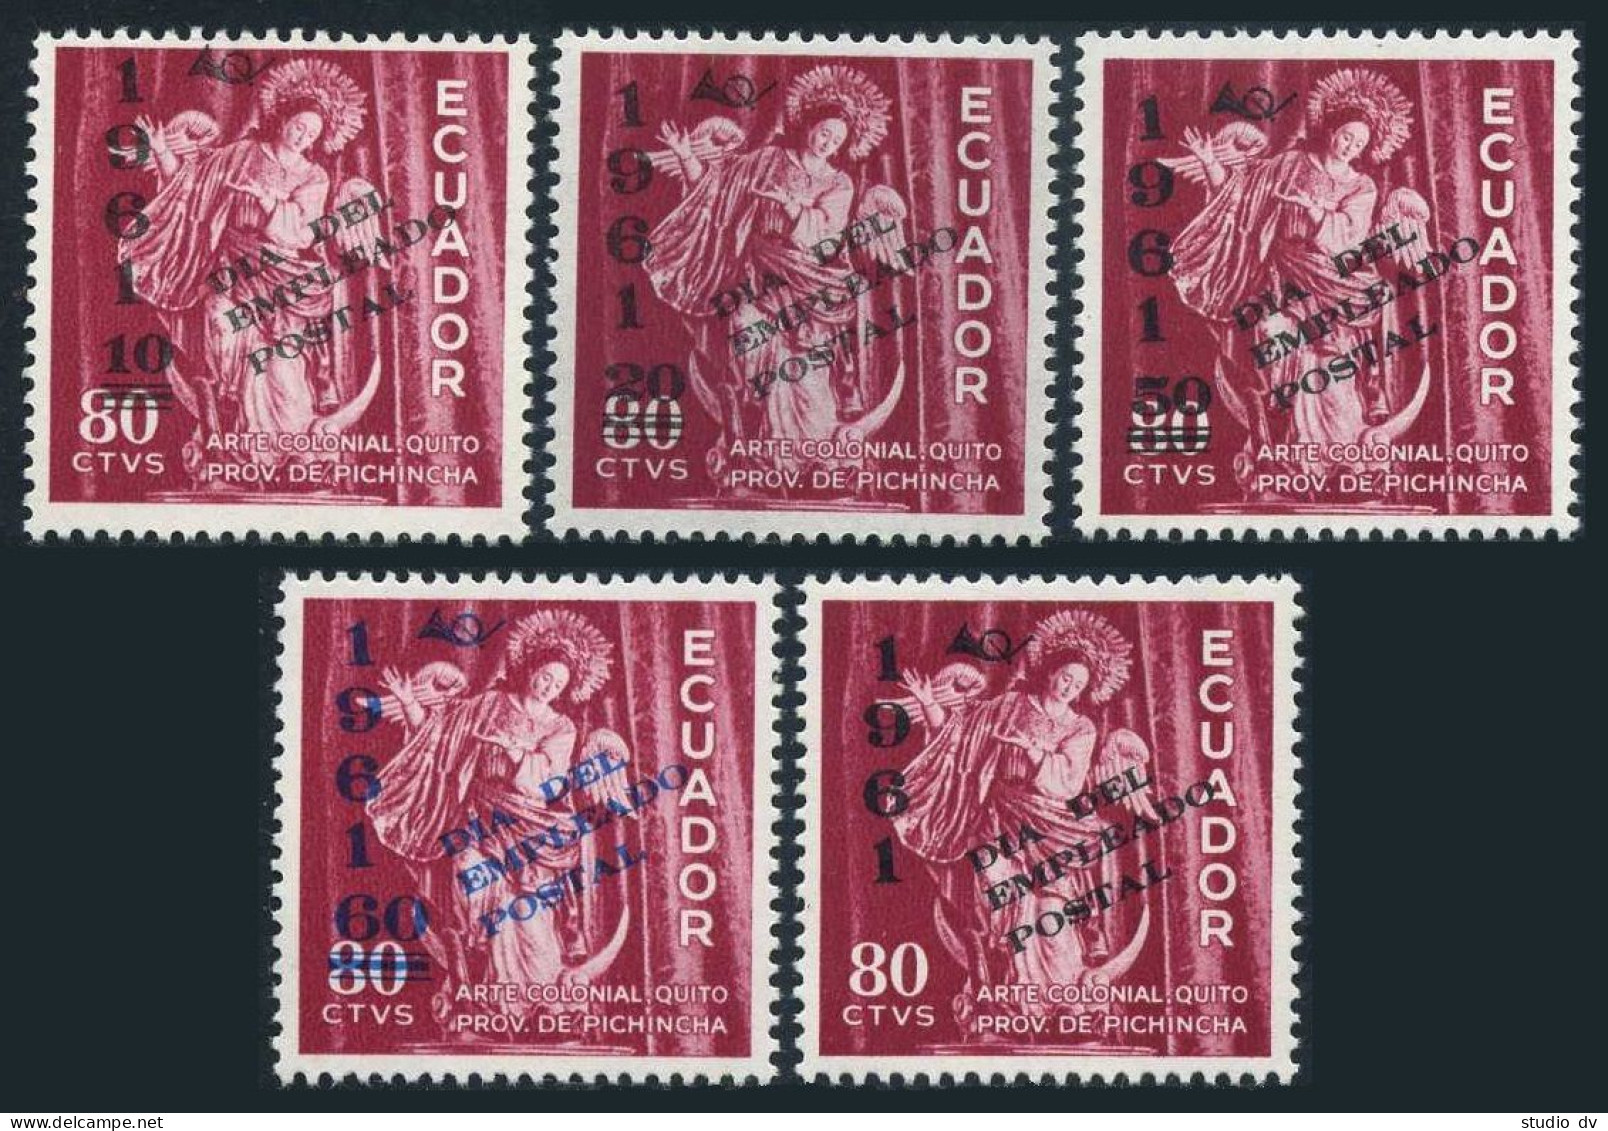 Ecuador 695-699,MNH.Michel 1117-1121. Virgin Of Quito,overprinted,1963. - Equateur